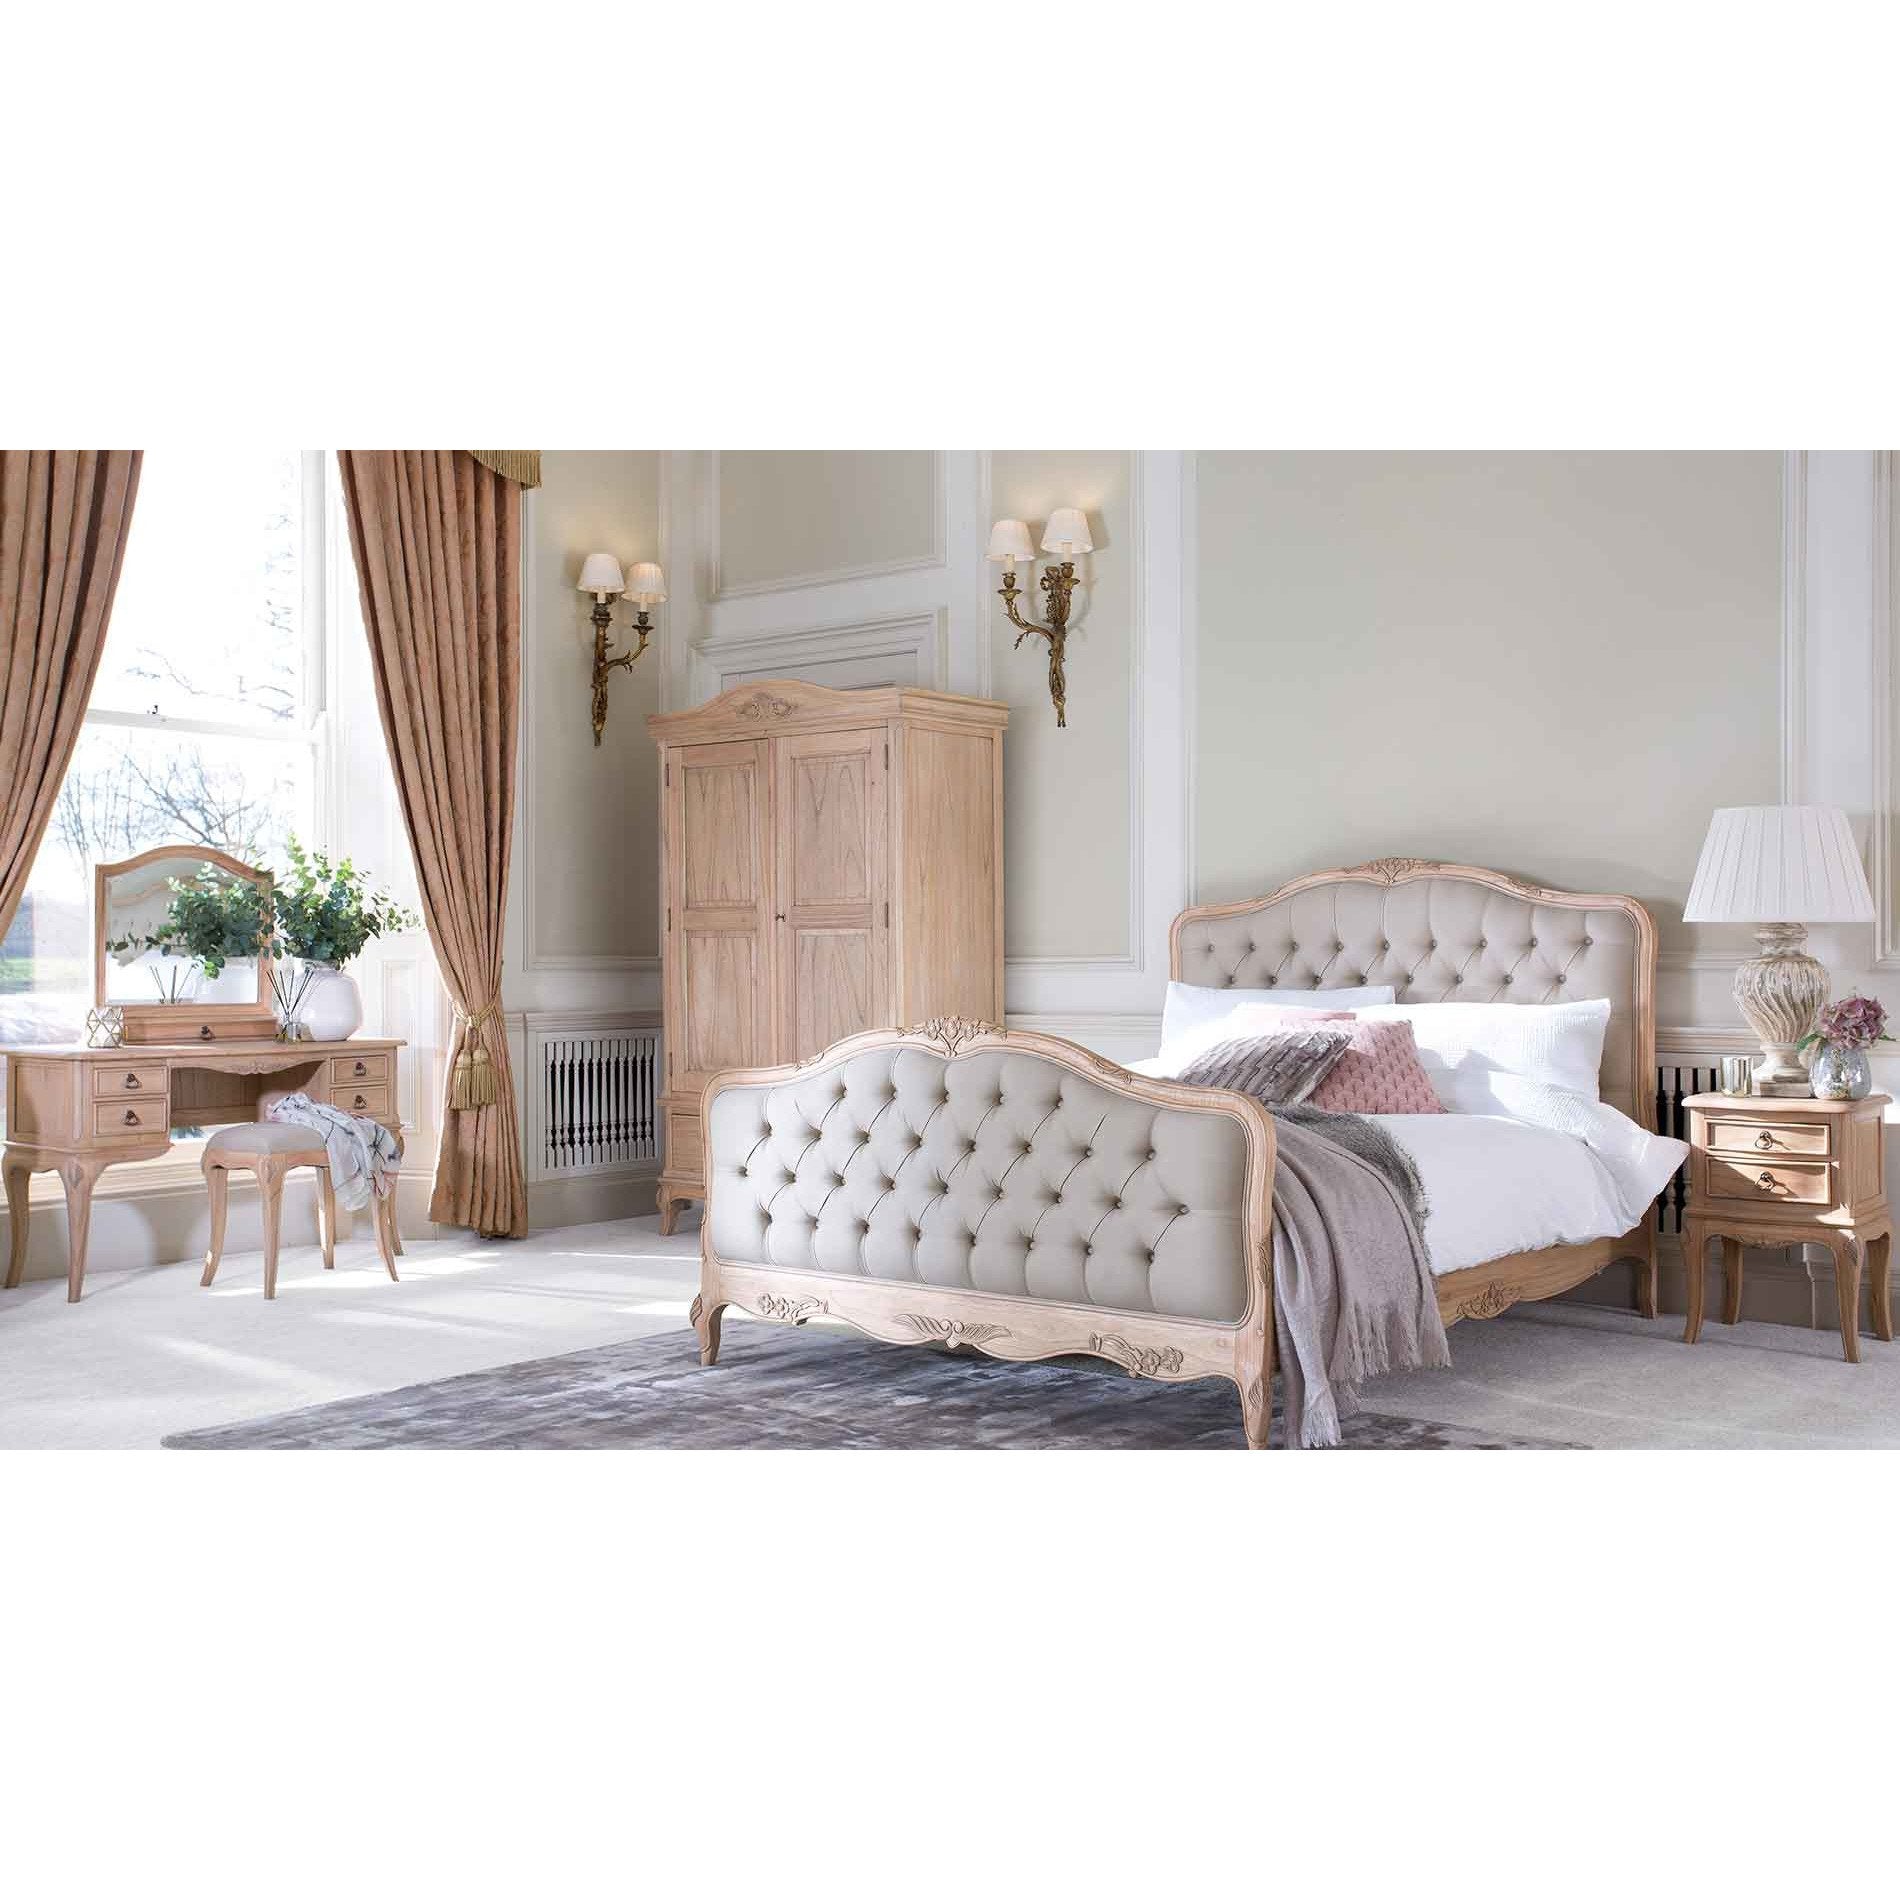 French style Limoges luxury bedroom range